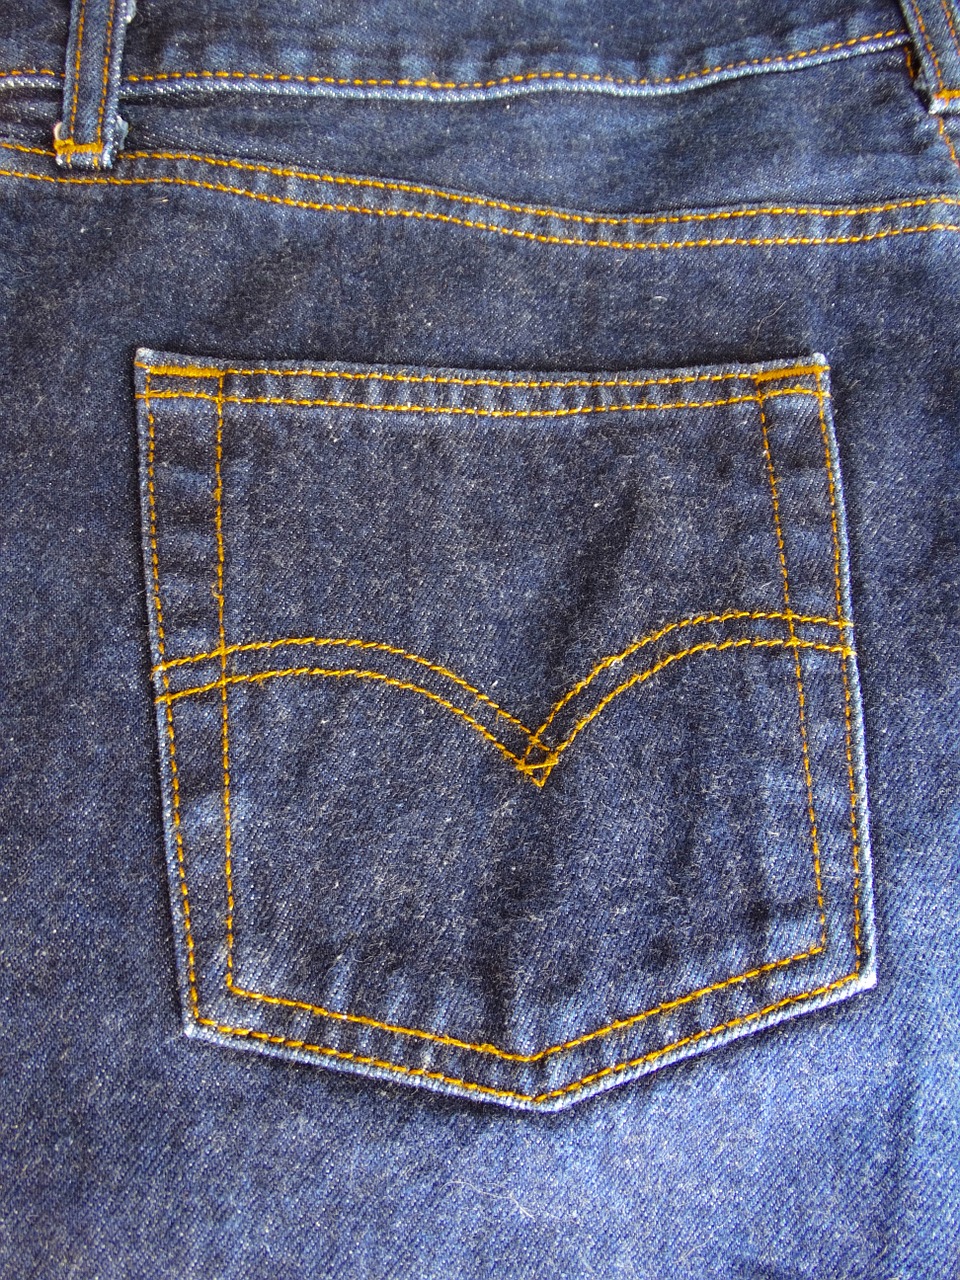 pants jeans seam free photo